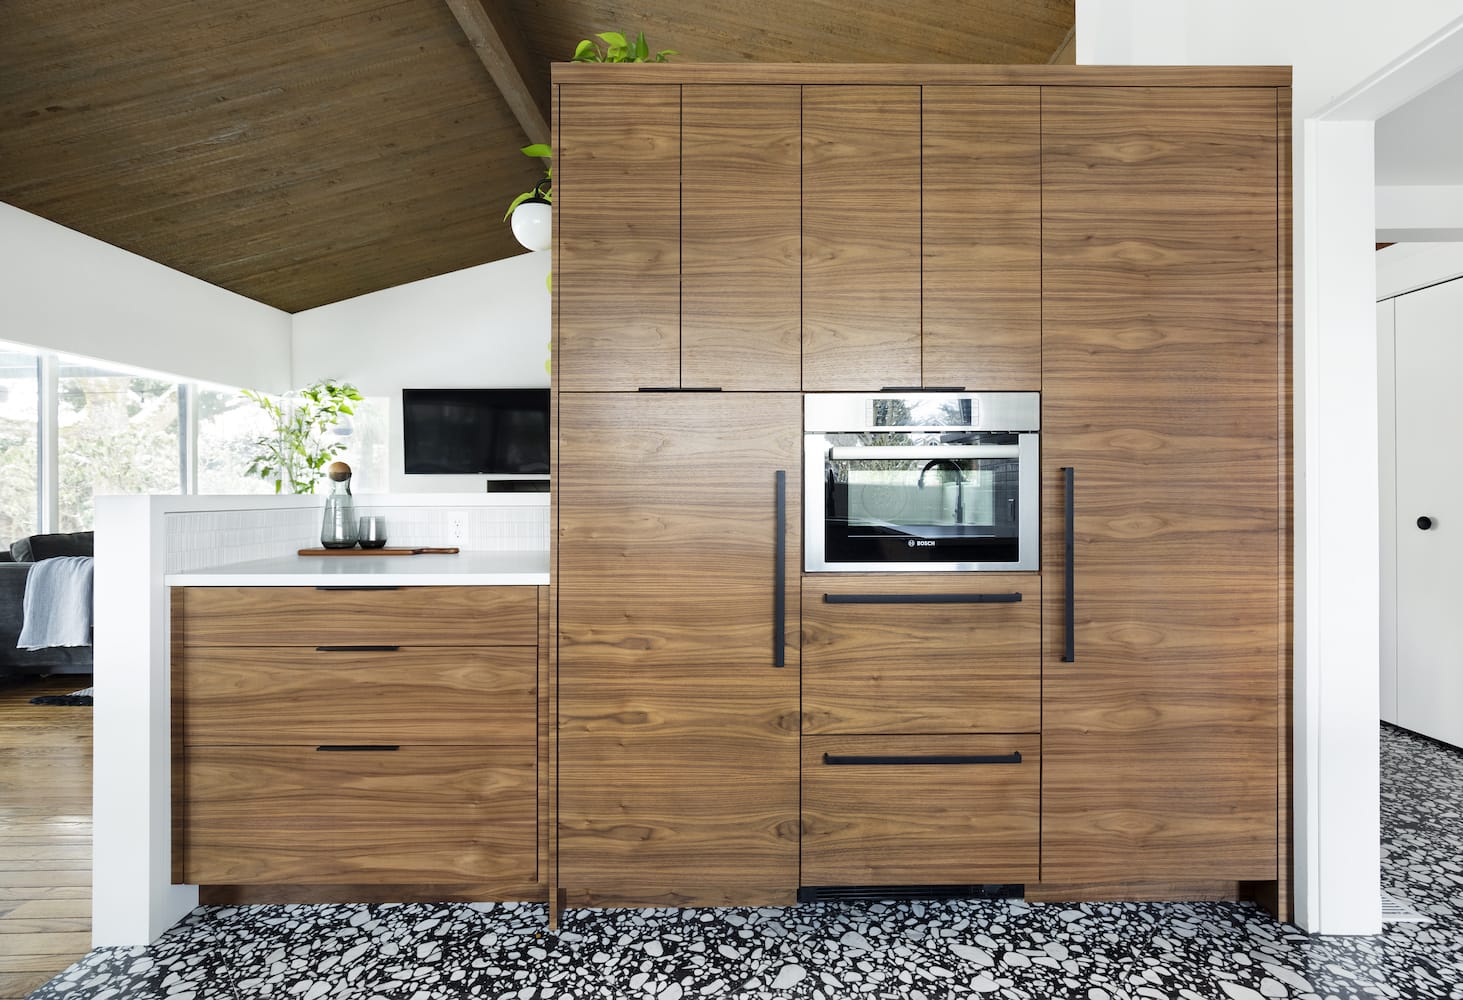 Remodeled kitchen with terrazzo floors, walnut cabinets, open floor plan